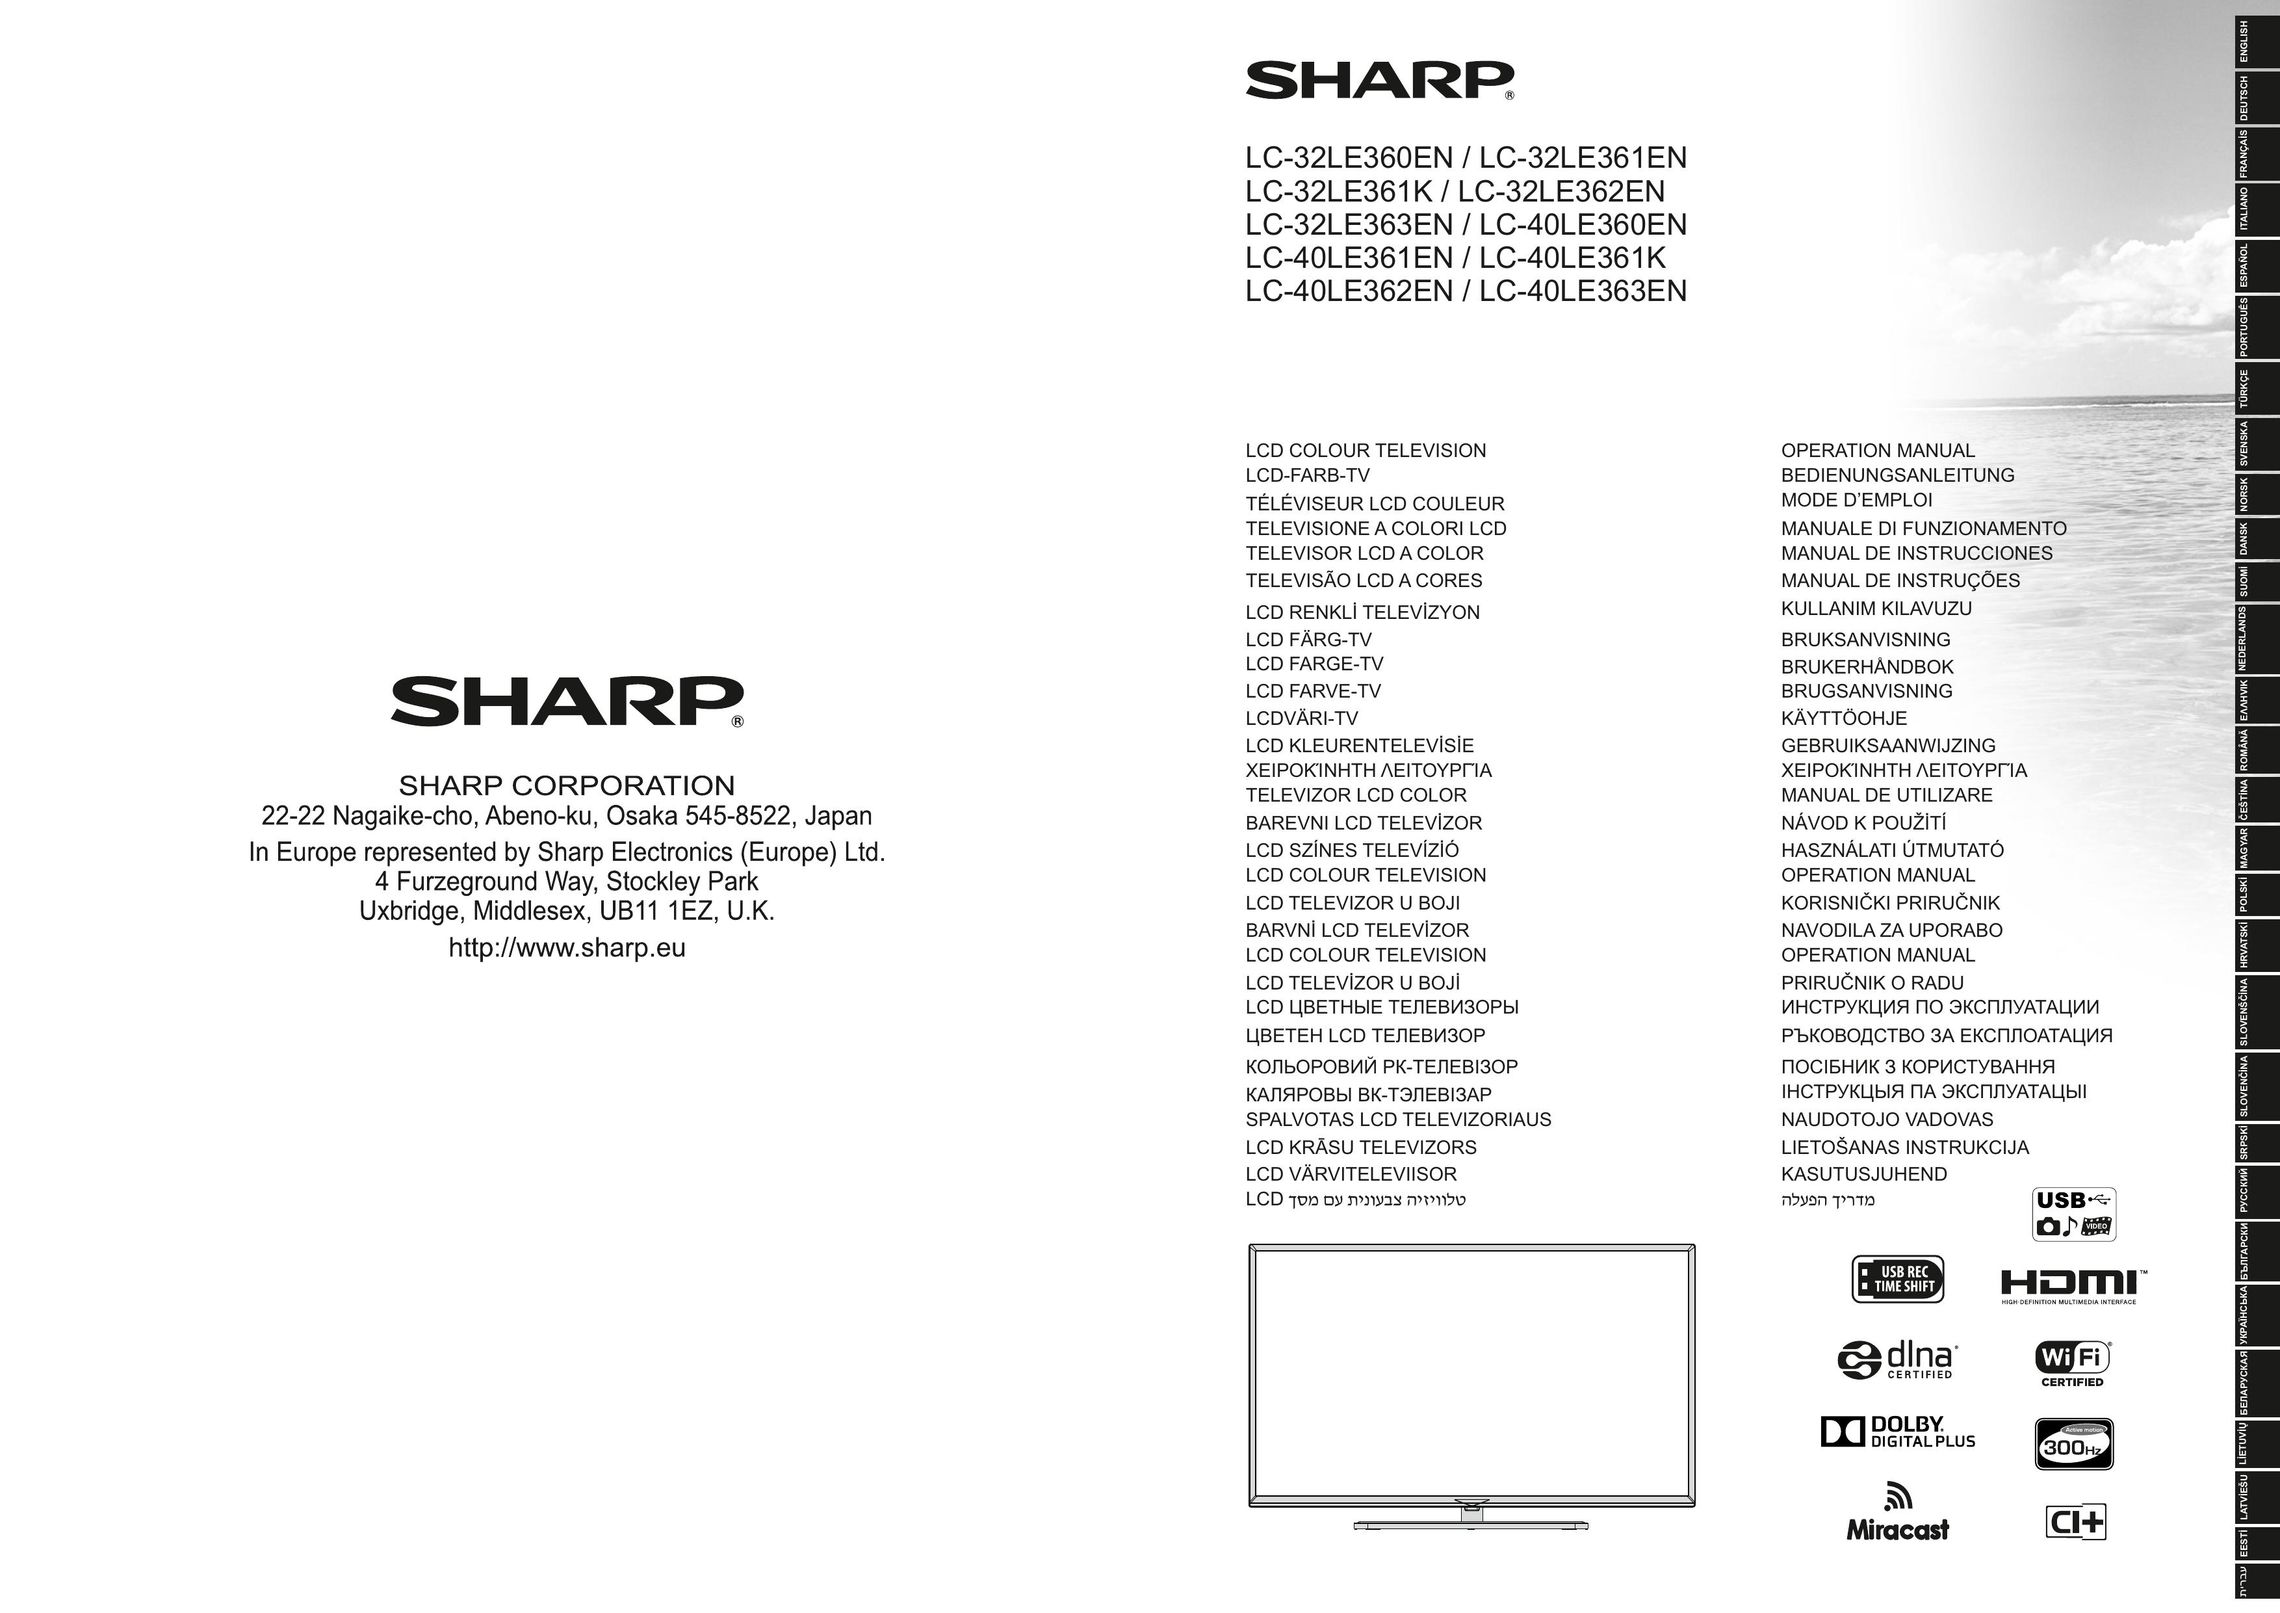 Sharp C-32LE360EN Flat Panel Television User Manual